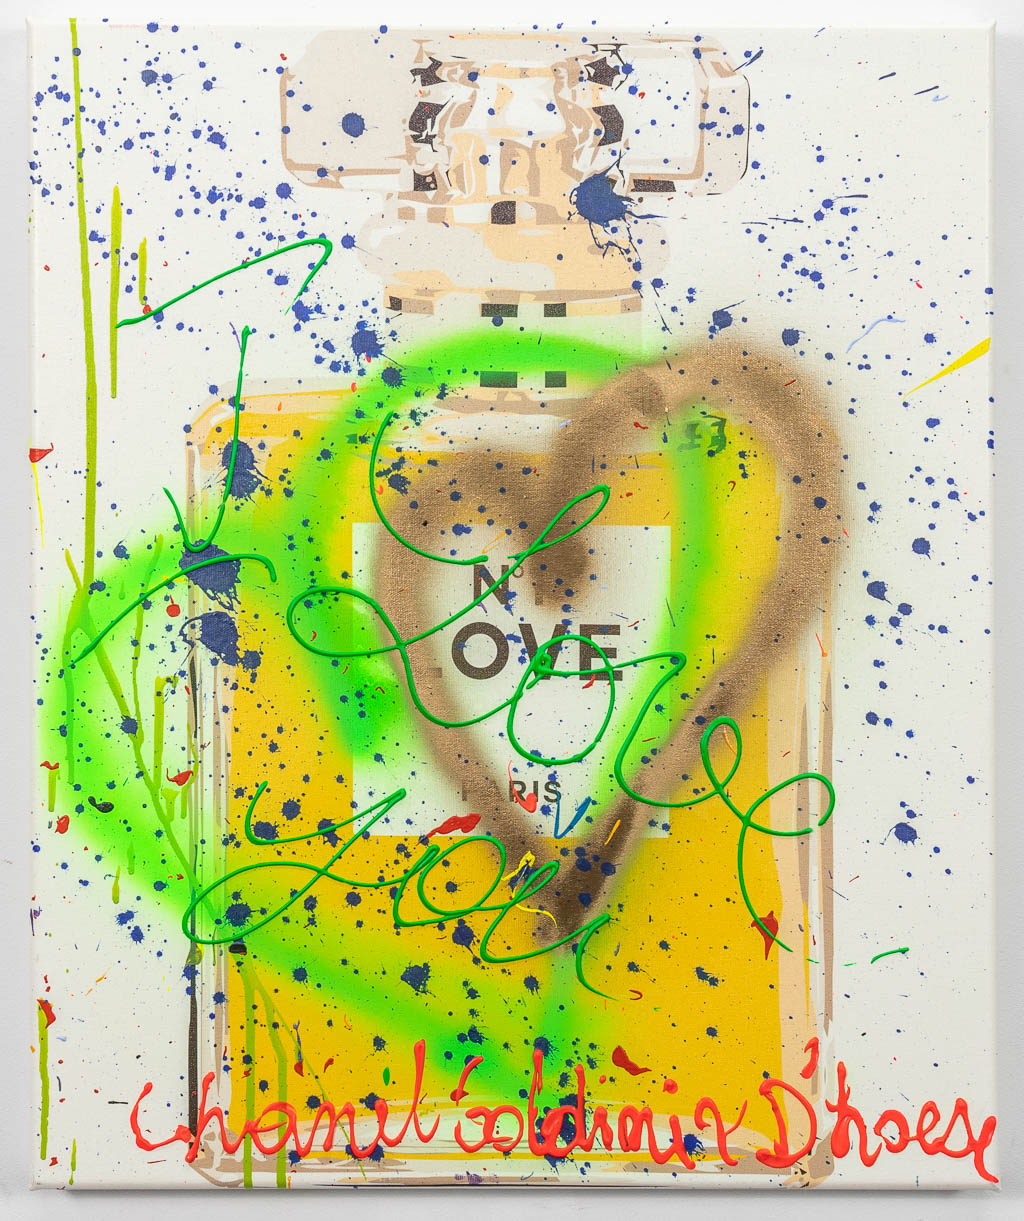 Hannes D'HAESE (1965) & Chanel GALDINI 'I Love You' (50 x 60 cm)